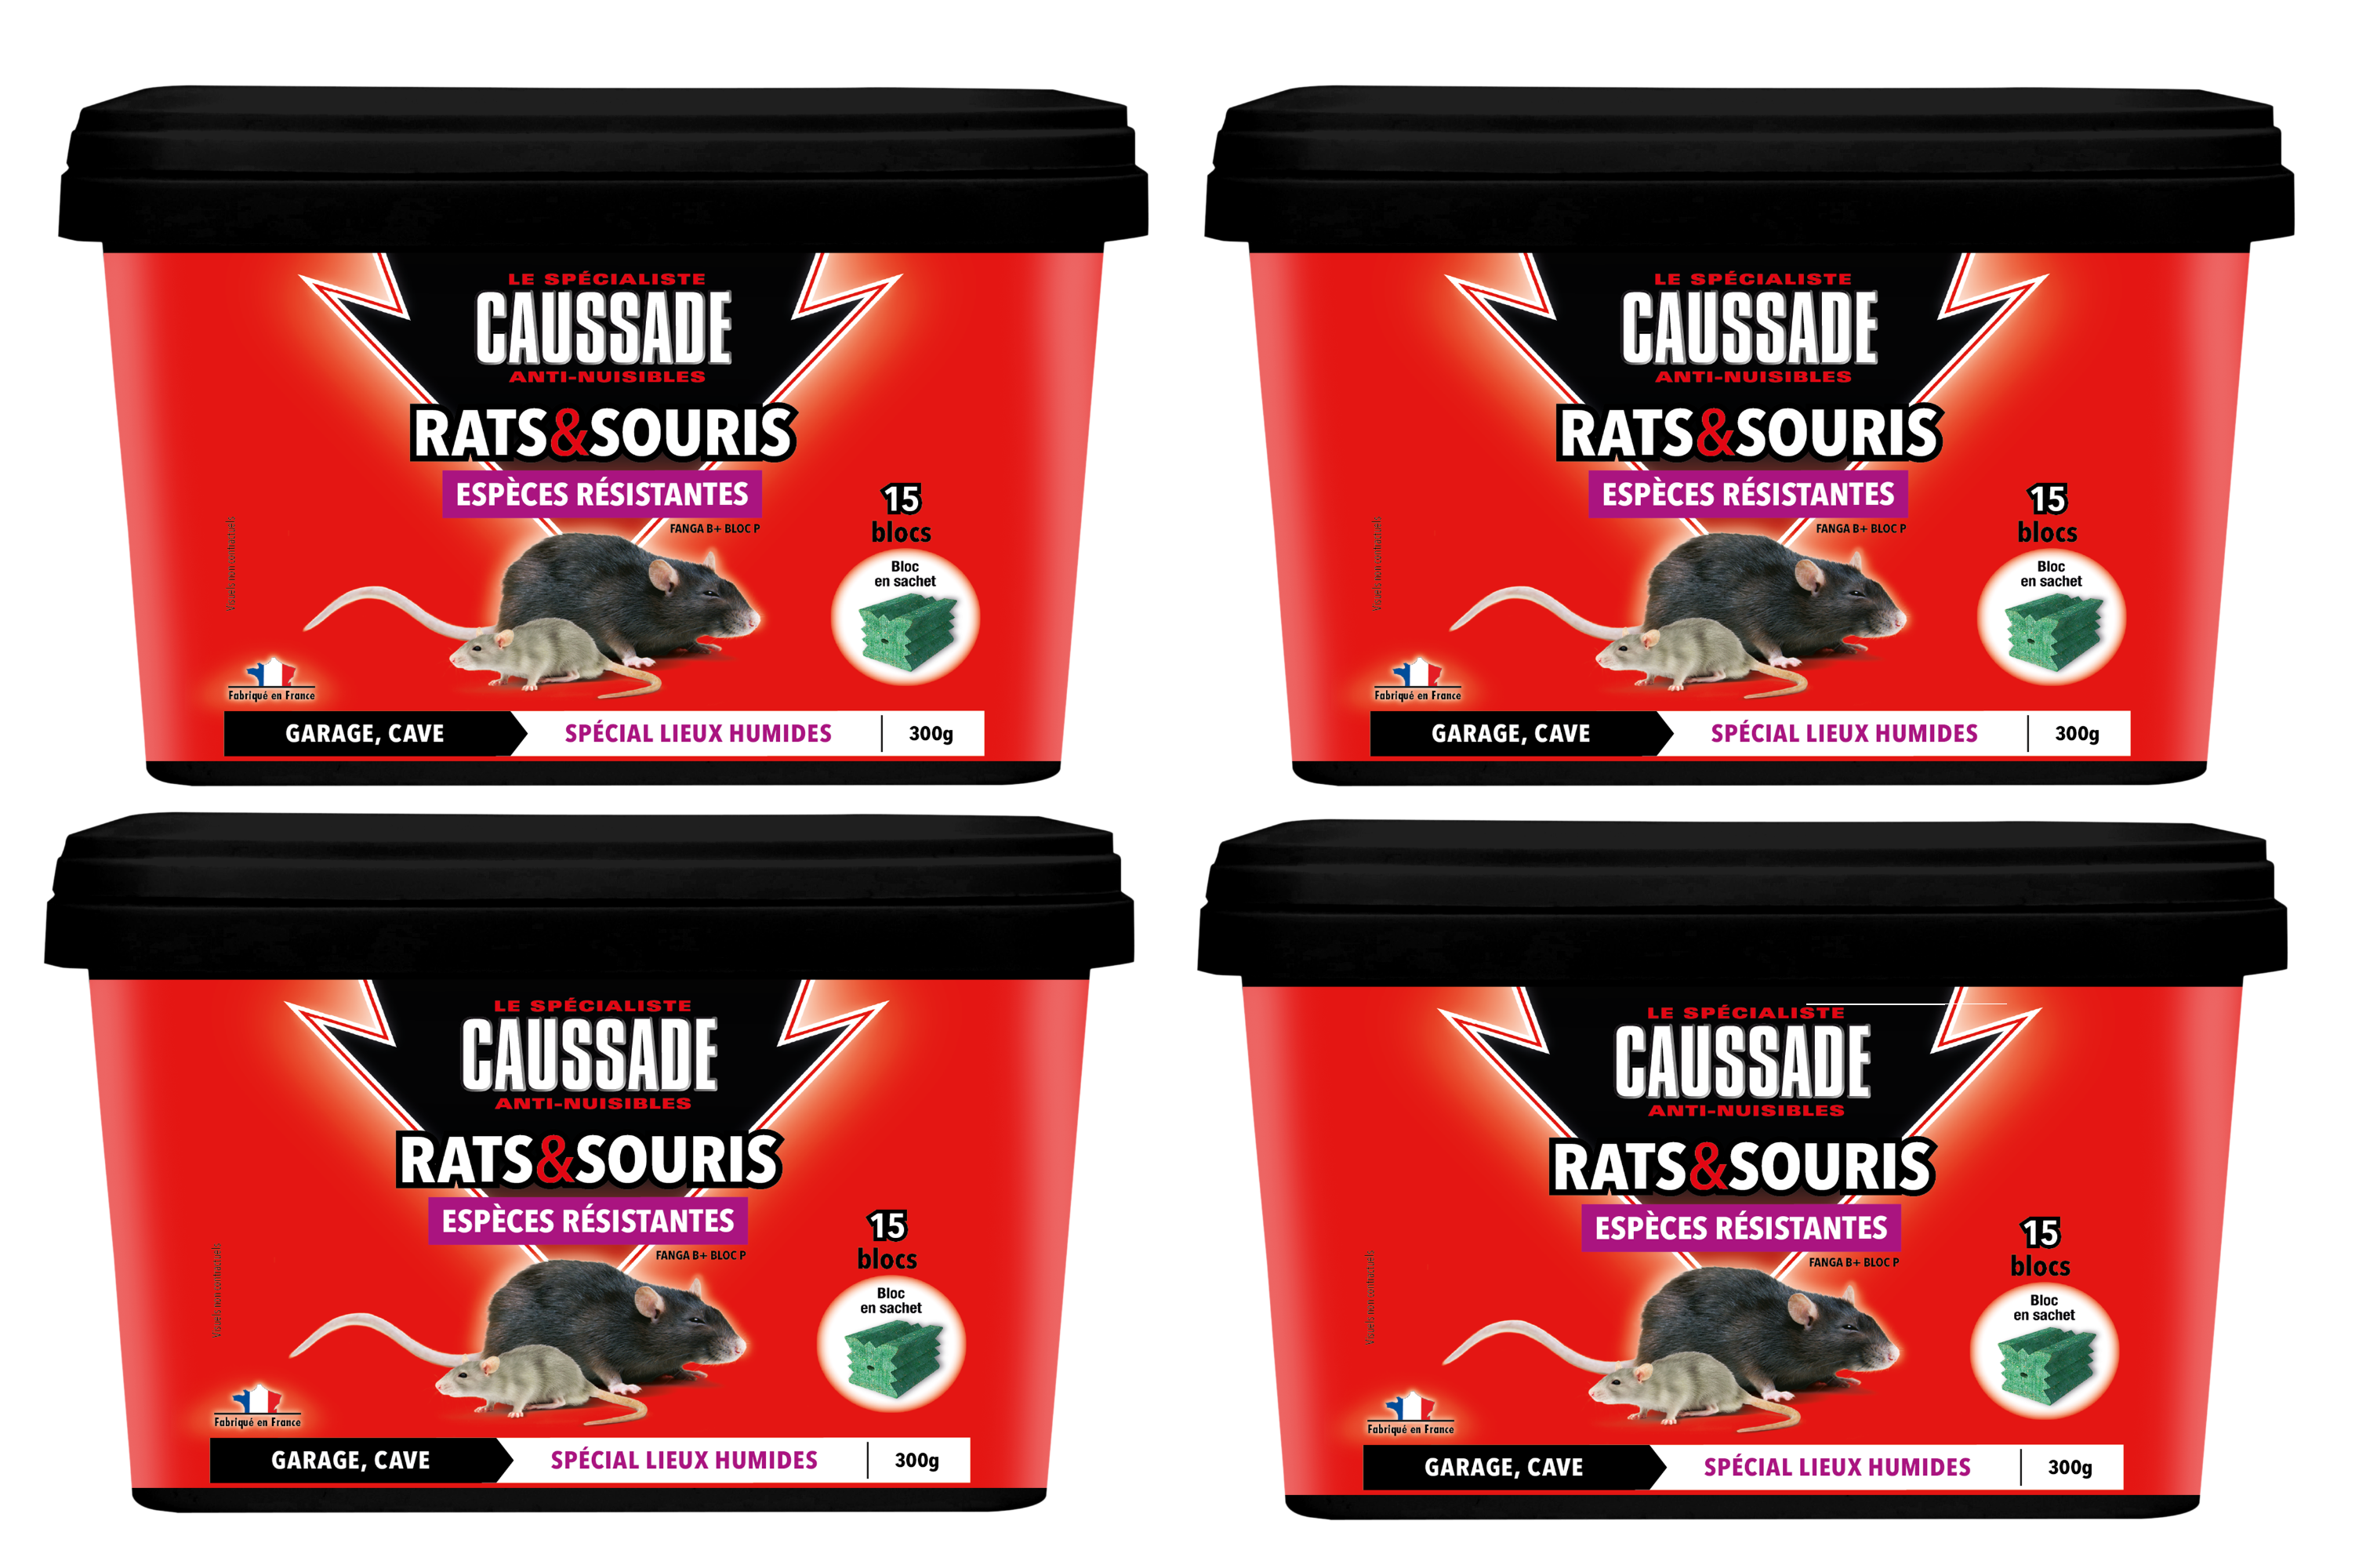 CAUSSADE CARSBLBF300 Lot de 2 boîtes Anti Rats & Souris, 2x15 Blocs, Lieux Humides, 2x300g, Espèces résistantes, Efficacité Maximale